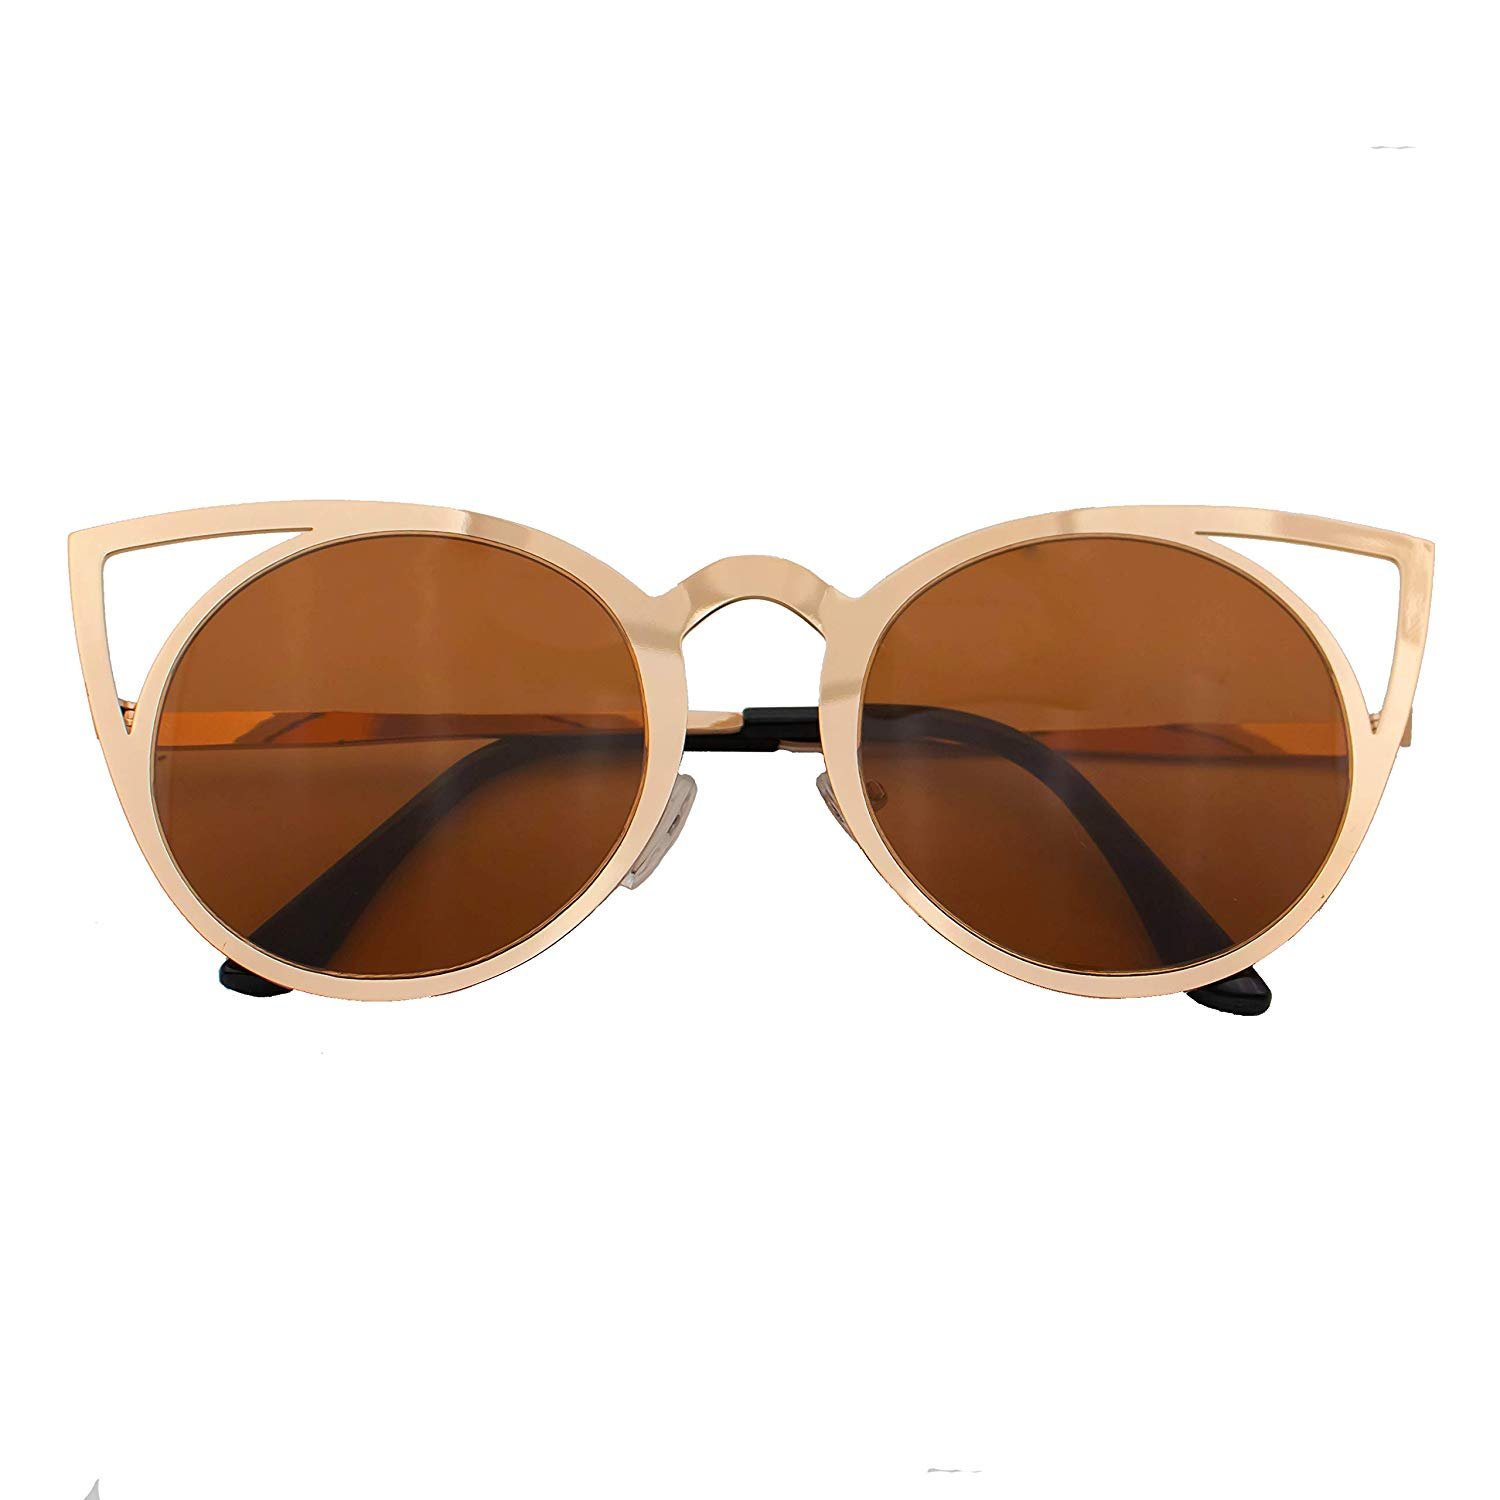 B-THERE Fashion Sunglasses Women Brand Designer Cat Eye Sun Glasses Vintage Woman (Golden/Brown Lens) - image 1 of 2